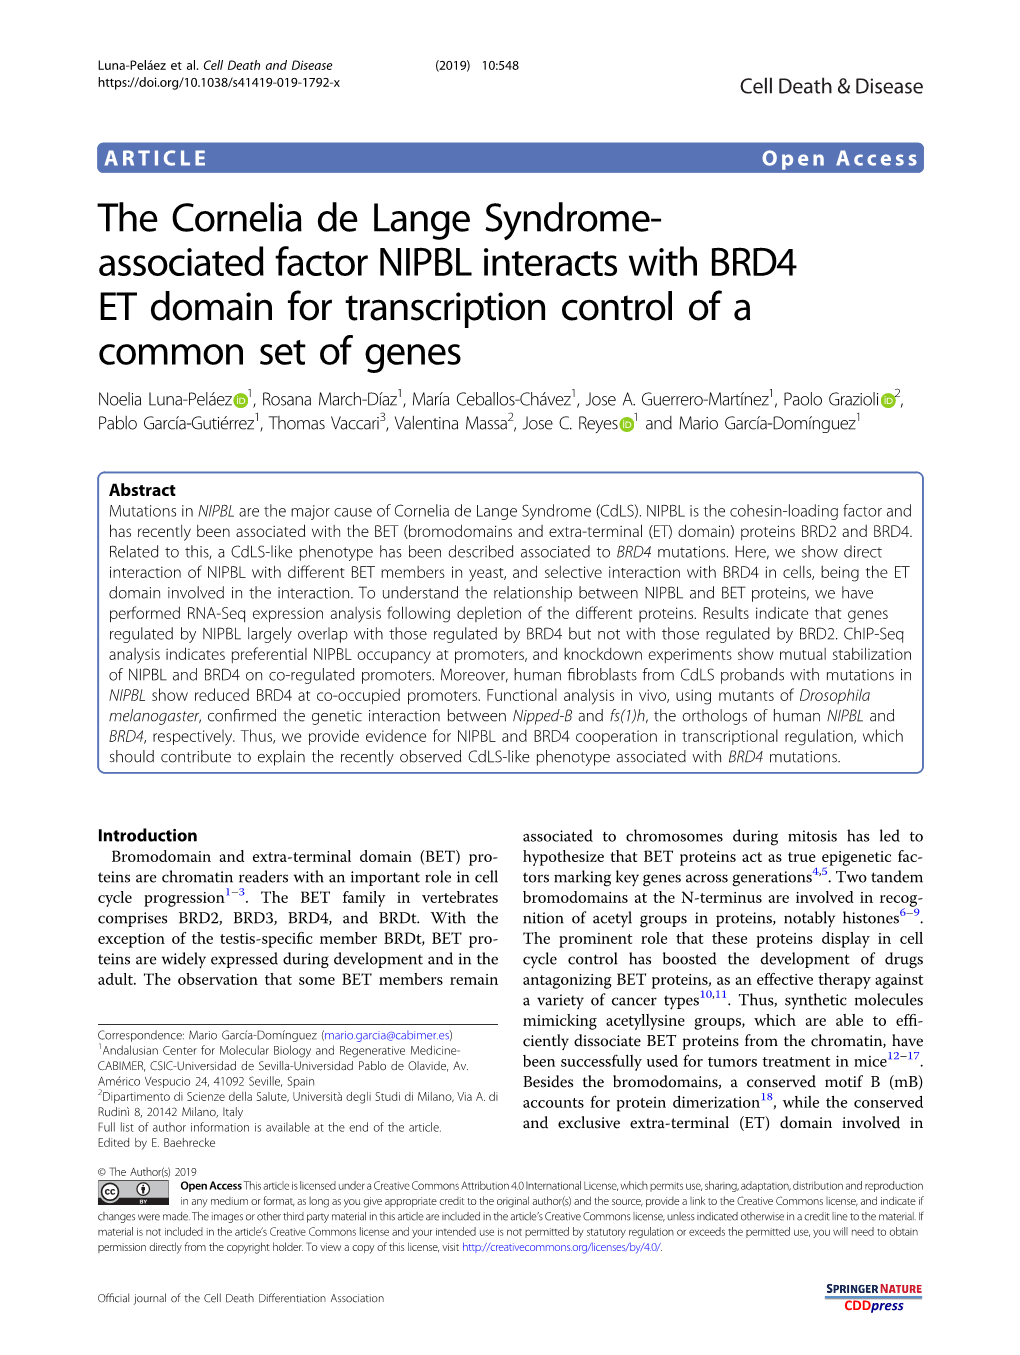 The Cornelia De Lange Syndrome-Associated Factor NIPBL